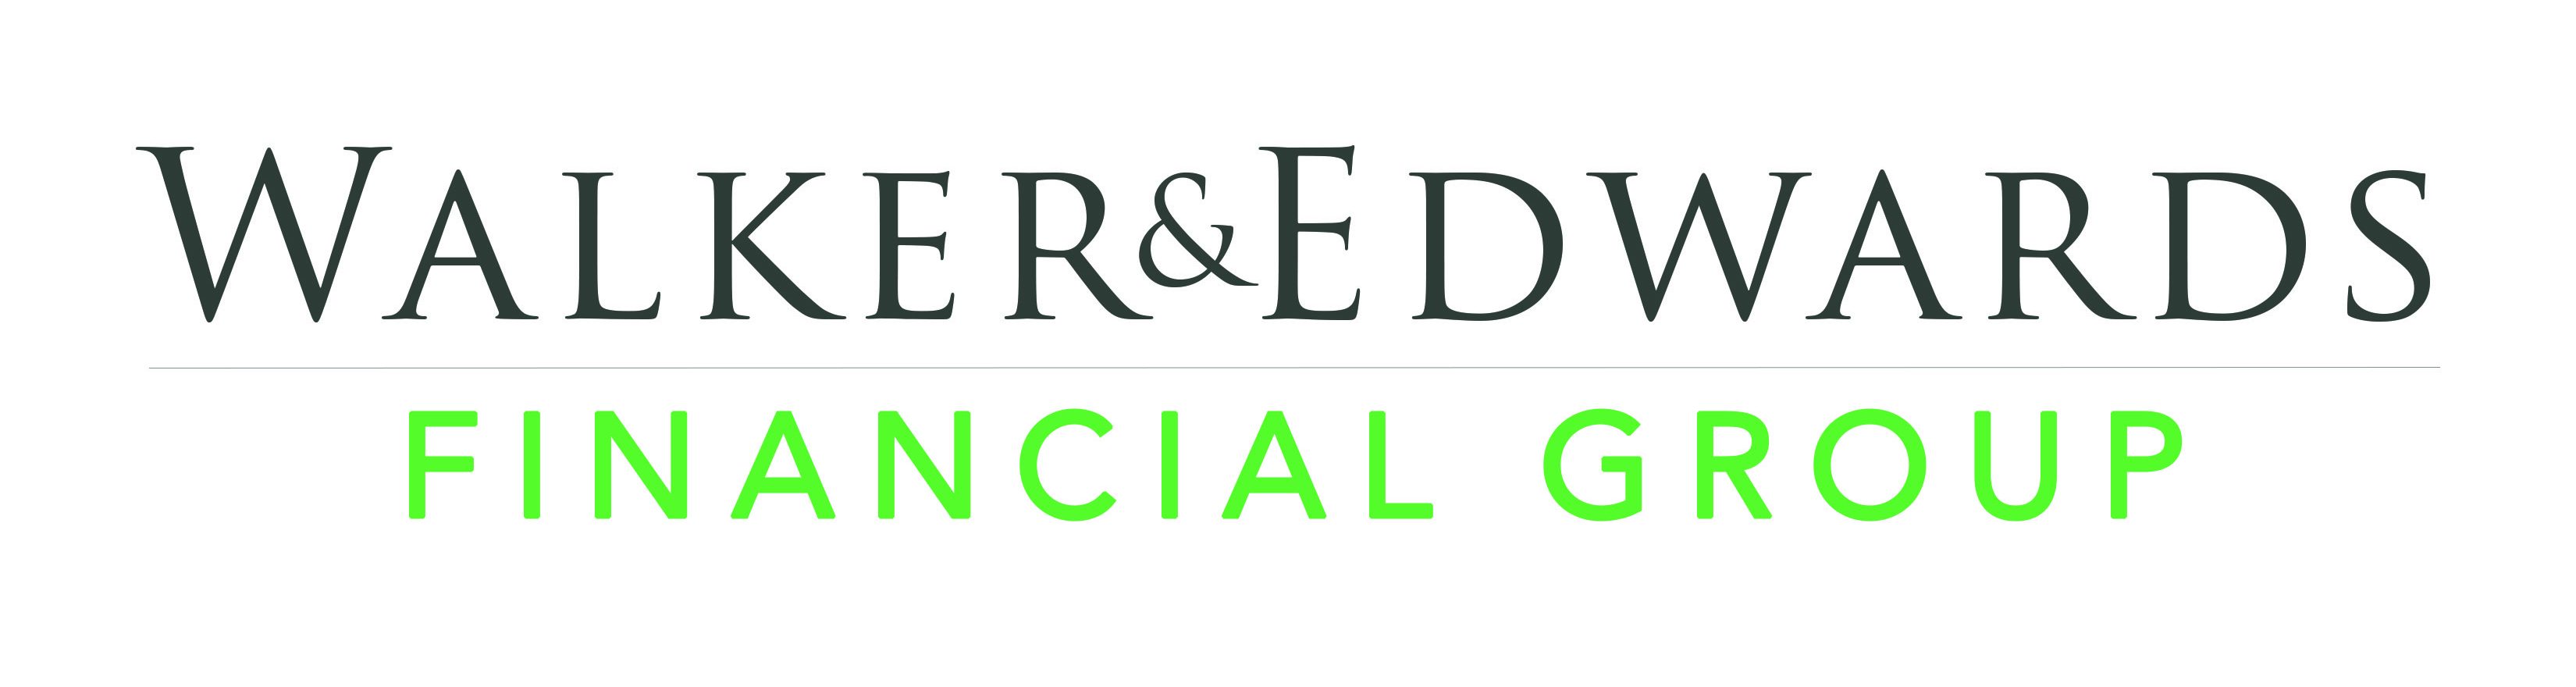 Walker Edwards Financial Group